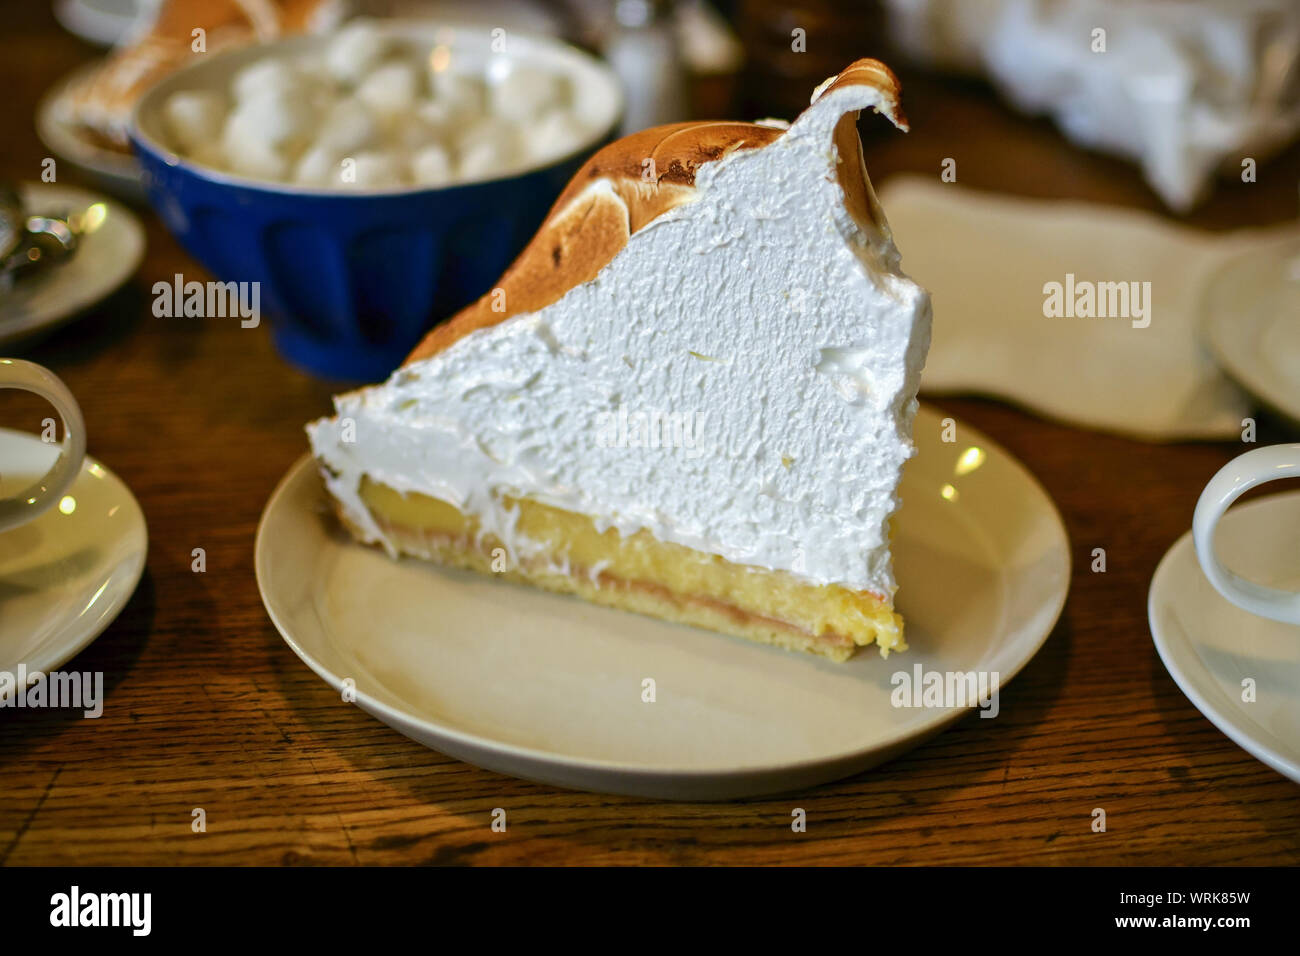 Gigantesco trozo de delicioso pastel de merengue de limón sobre la mesa de madera en un café. Foto de stock